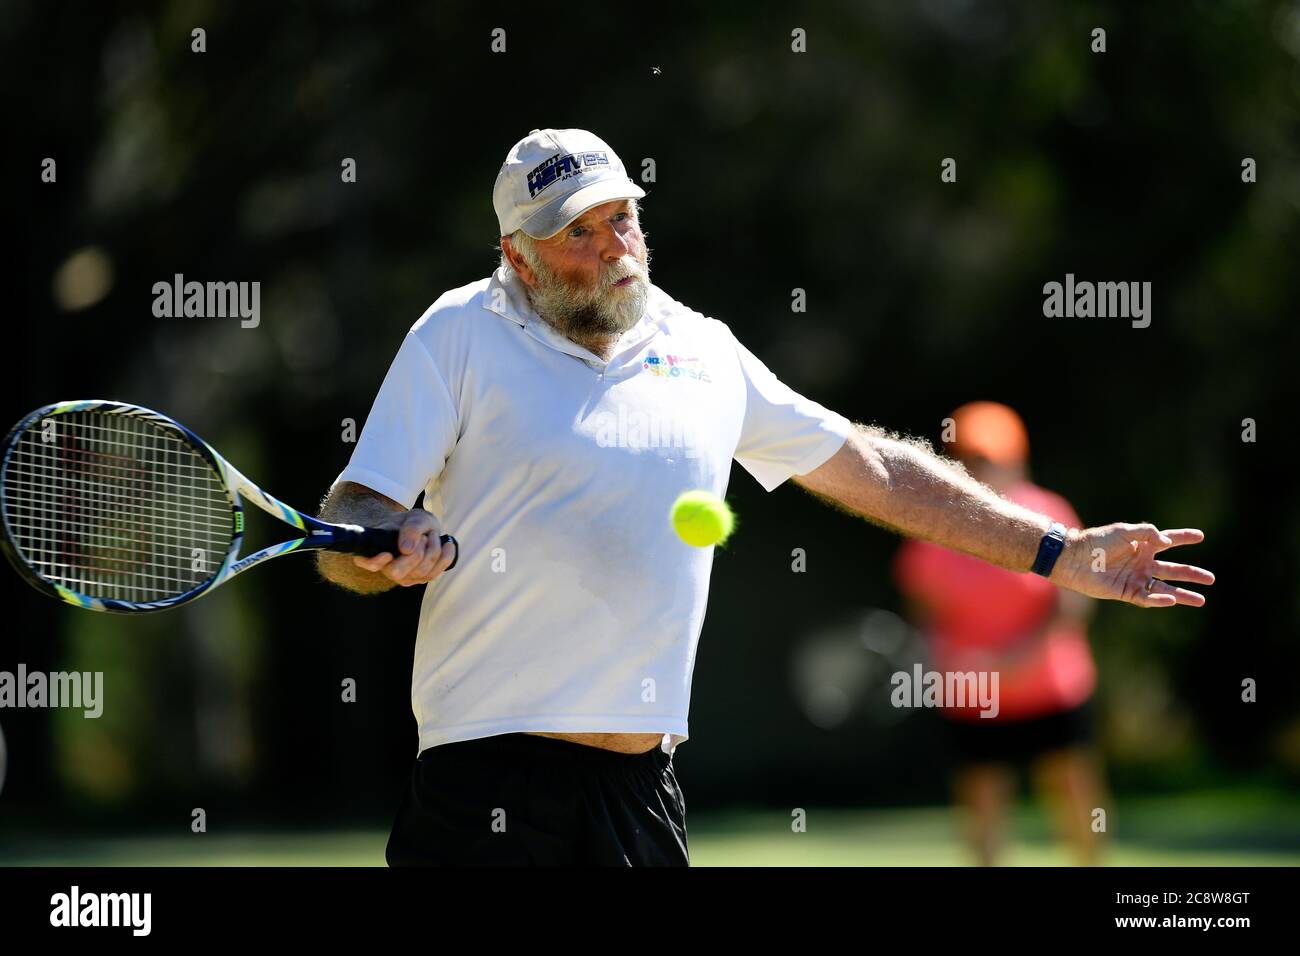 Grass roots sport. an older man prepares to take a shot during a tennis match, Benalla, Victoria, Australia Stock Photo